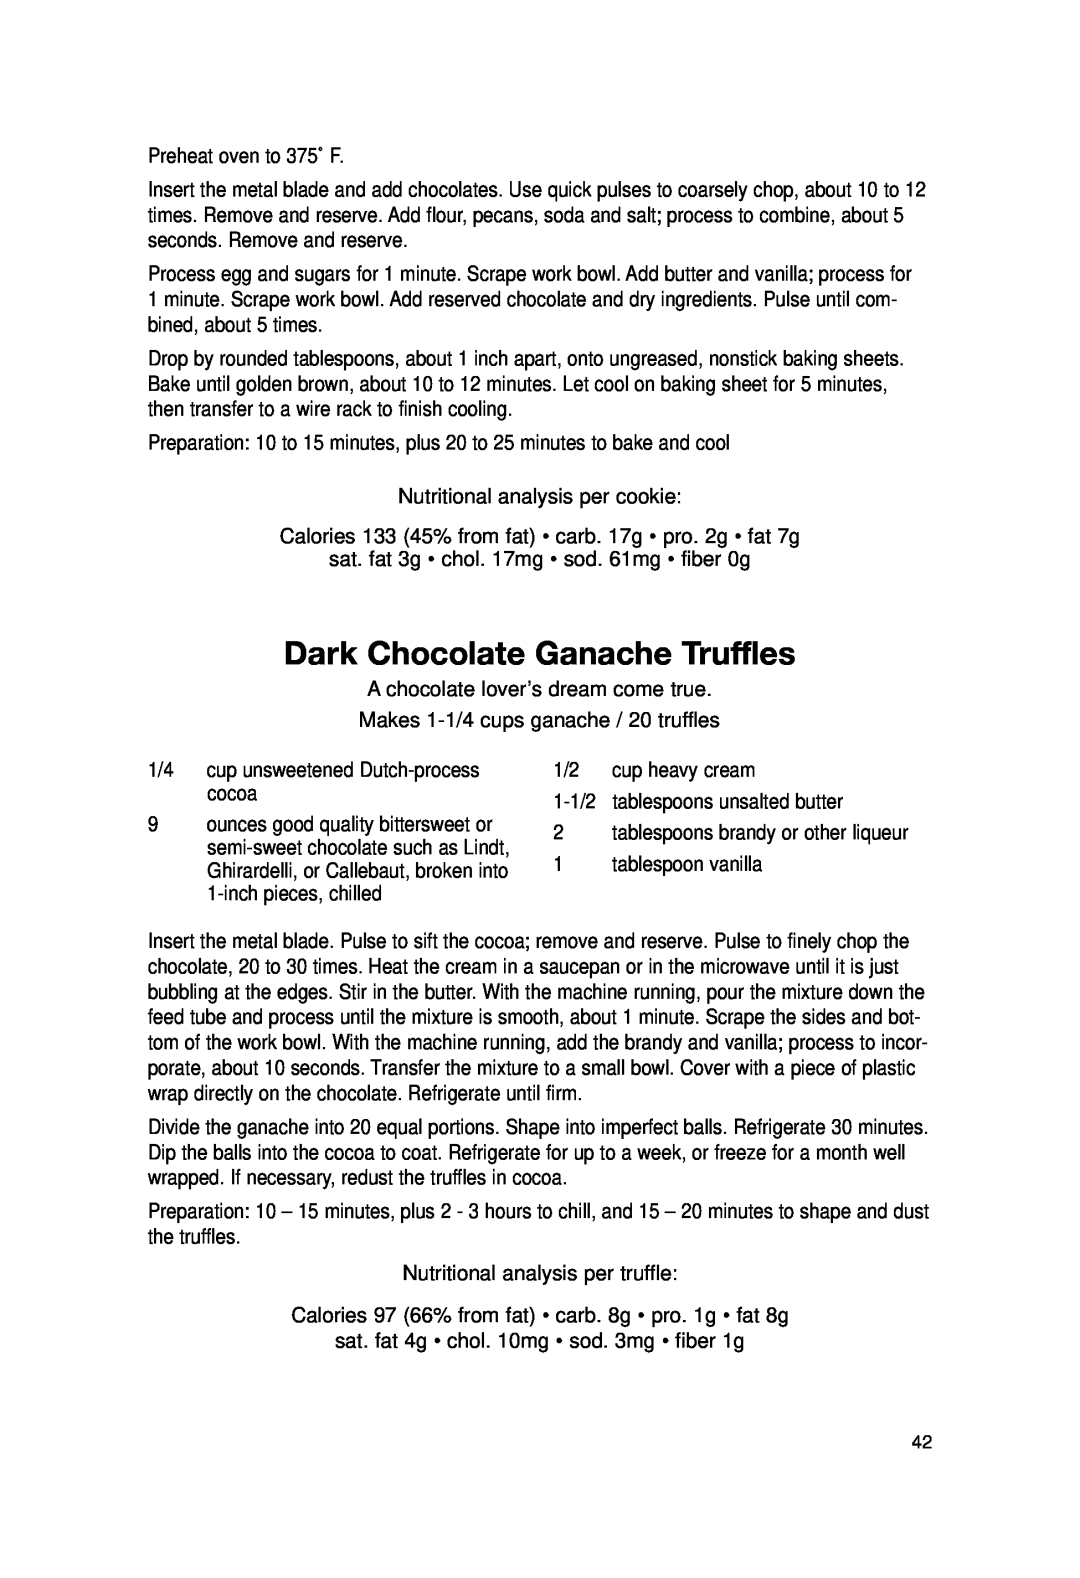 Cuisinart DLC-2007N manual Dark Chocolate Ganache Truffles 